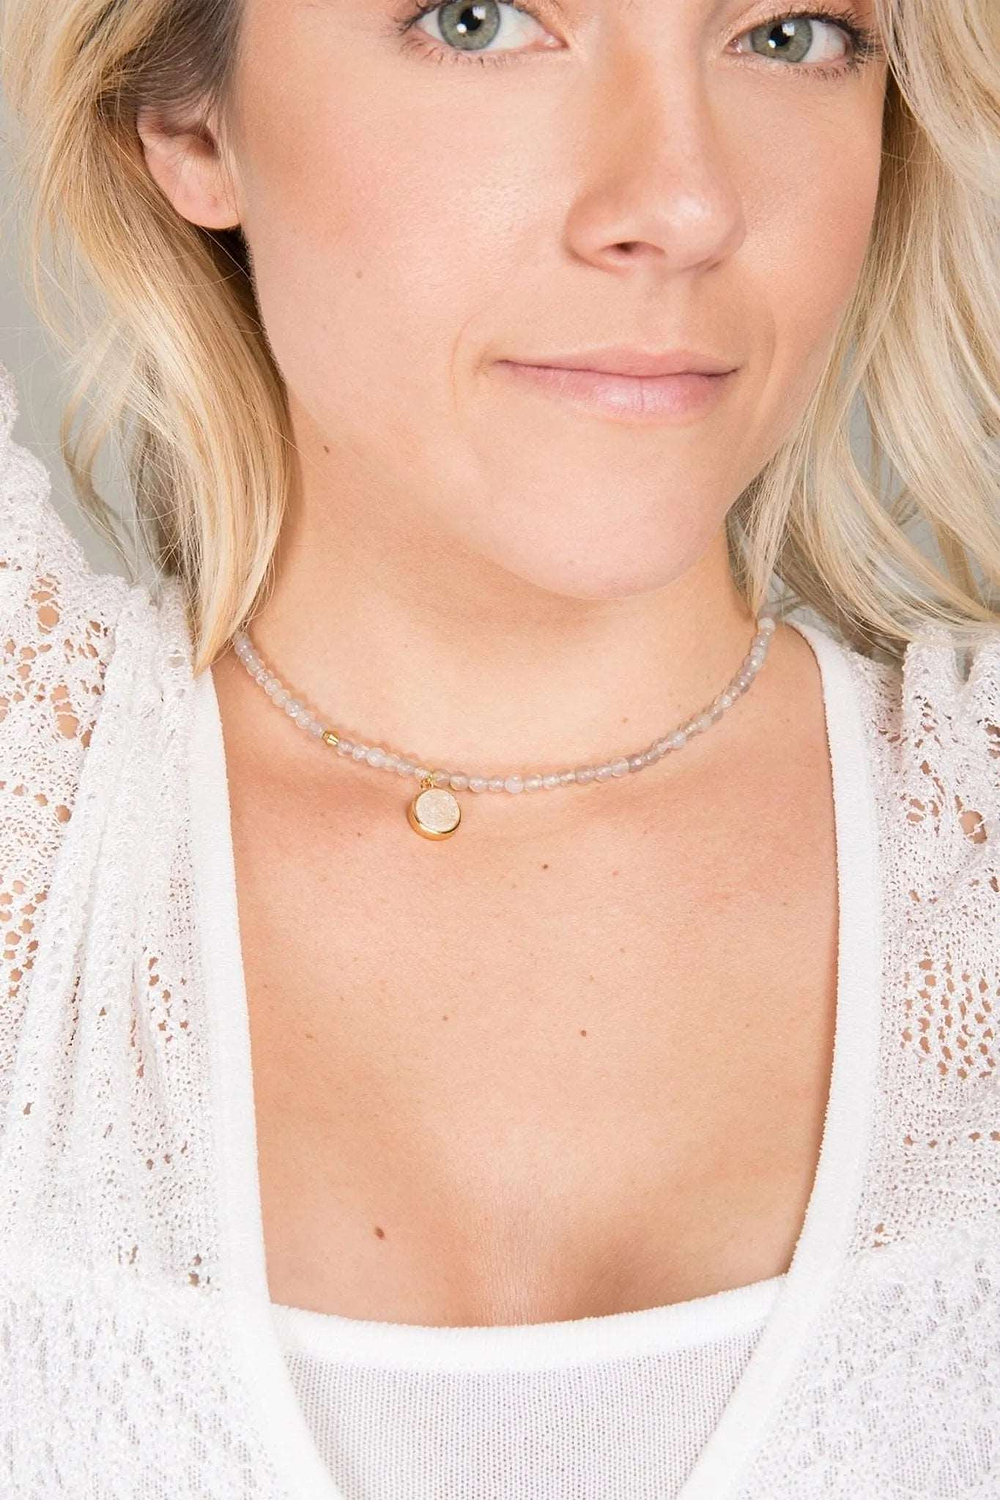 Agate Gemstone Beads Necklace with Druzy Pendant Papaya Whip